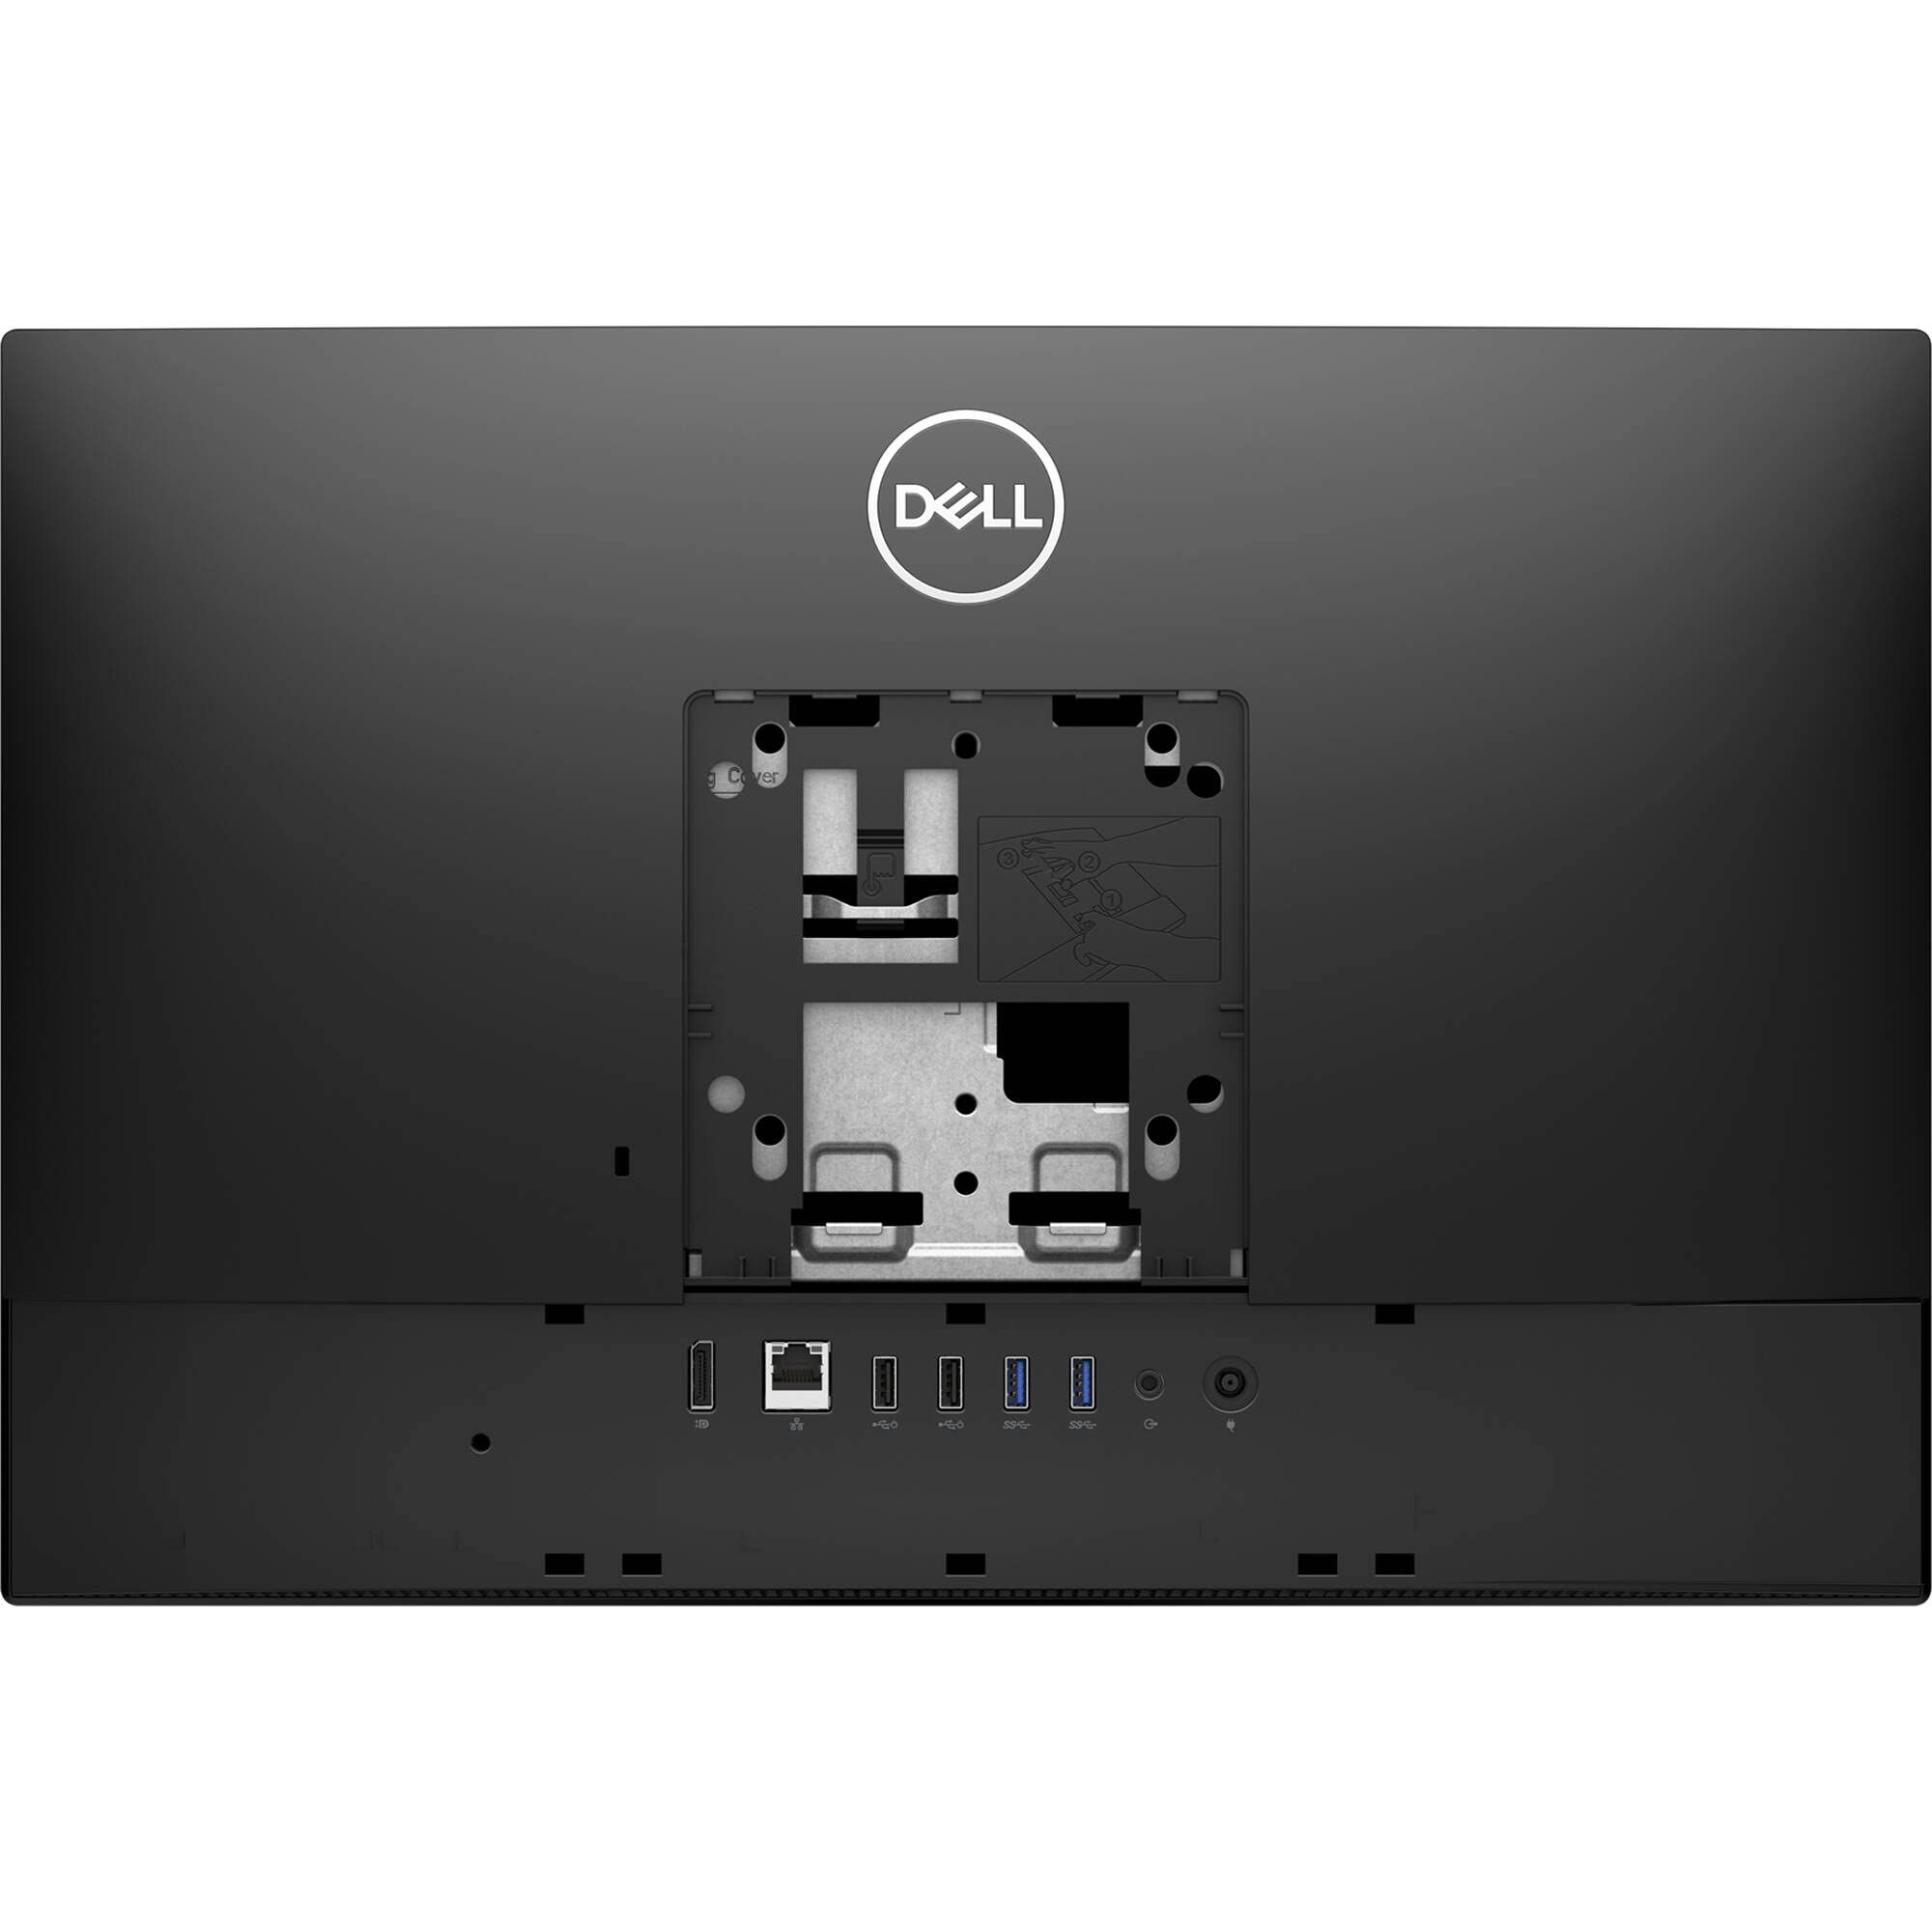 Dell OptiPlex 3280 21.5" Full HD All-in-One Desktop Computer - 10th Gen Intel Core i5-10500T 6-Core up to 3.80 GHz Processor, 8GB DDR4 RAM, 256GB NVMe SSD, Intel UHD Graphics 630, Windows 10 Pro